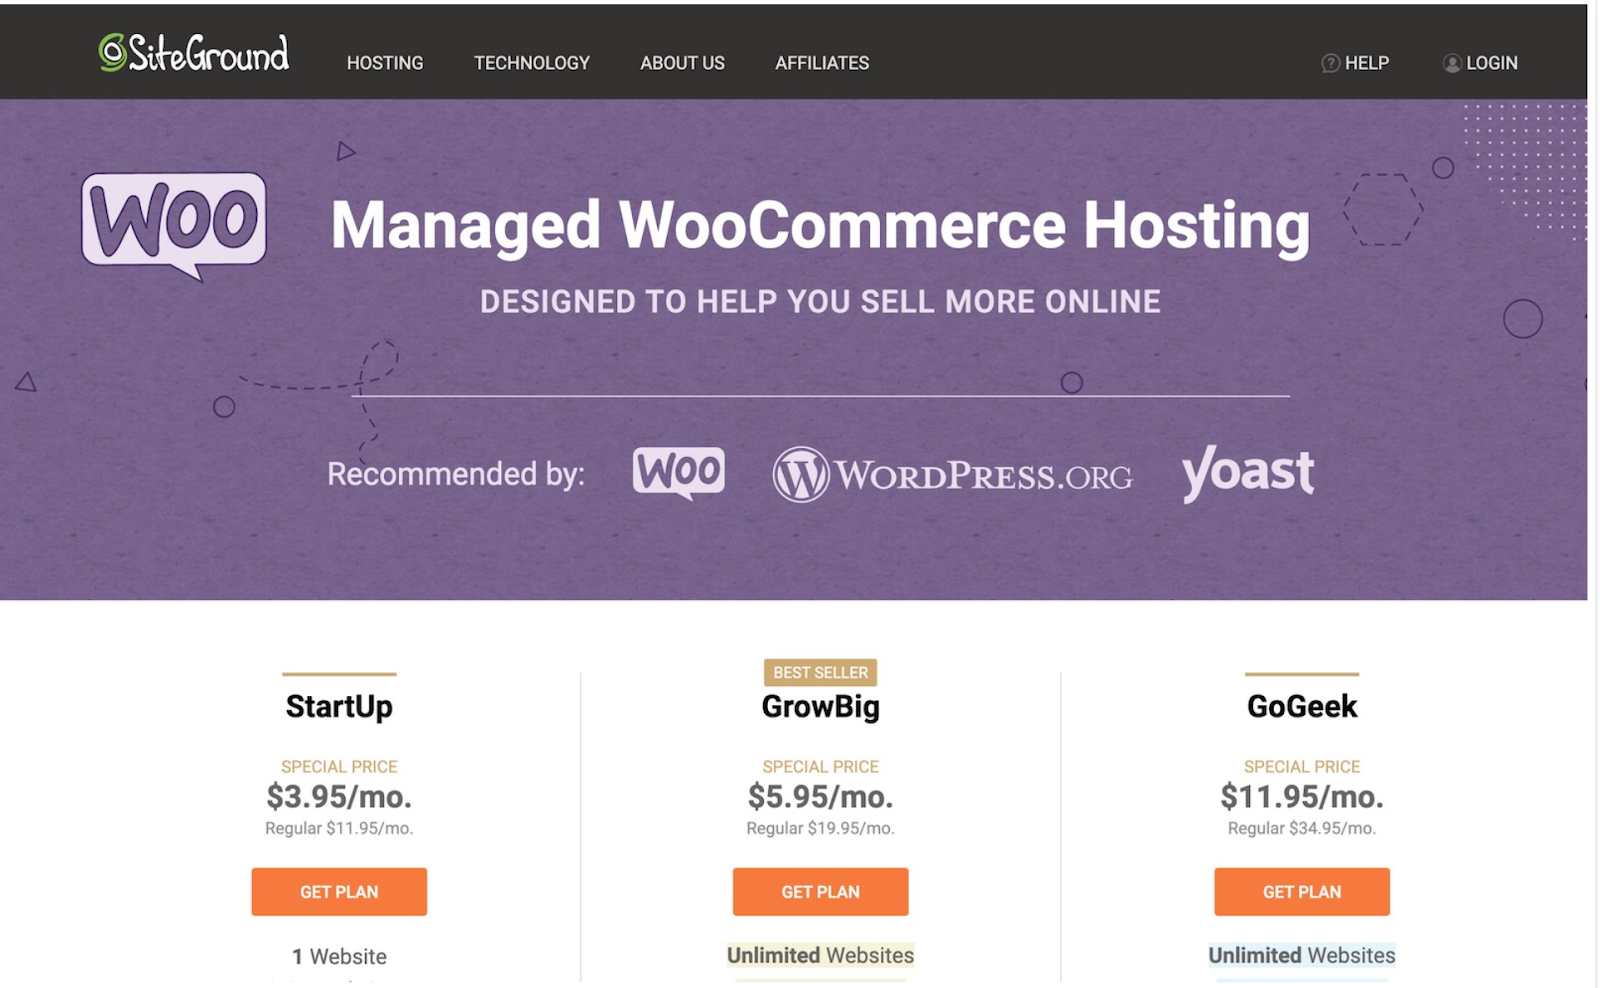 Siteground WooCommerce Hositng